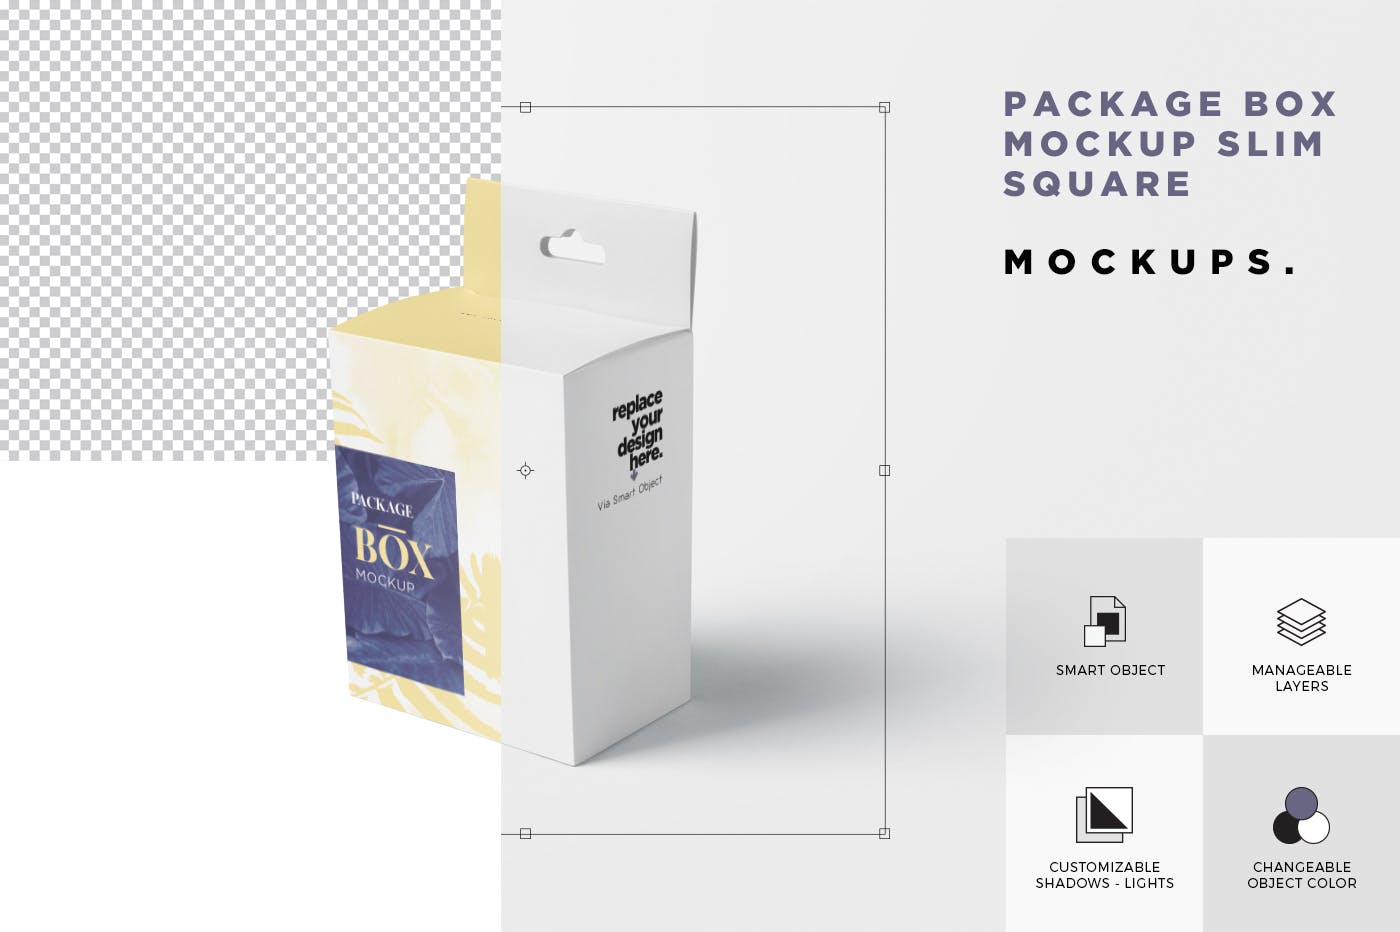 挂耳式扁平矩形包装盒普贤居精选模板 Package Box Mockup Set – Slim Square with Hanger插图(6)